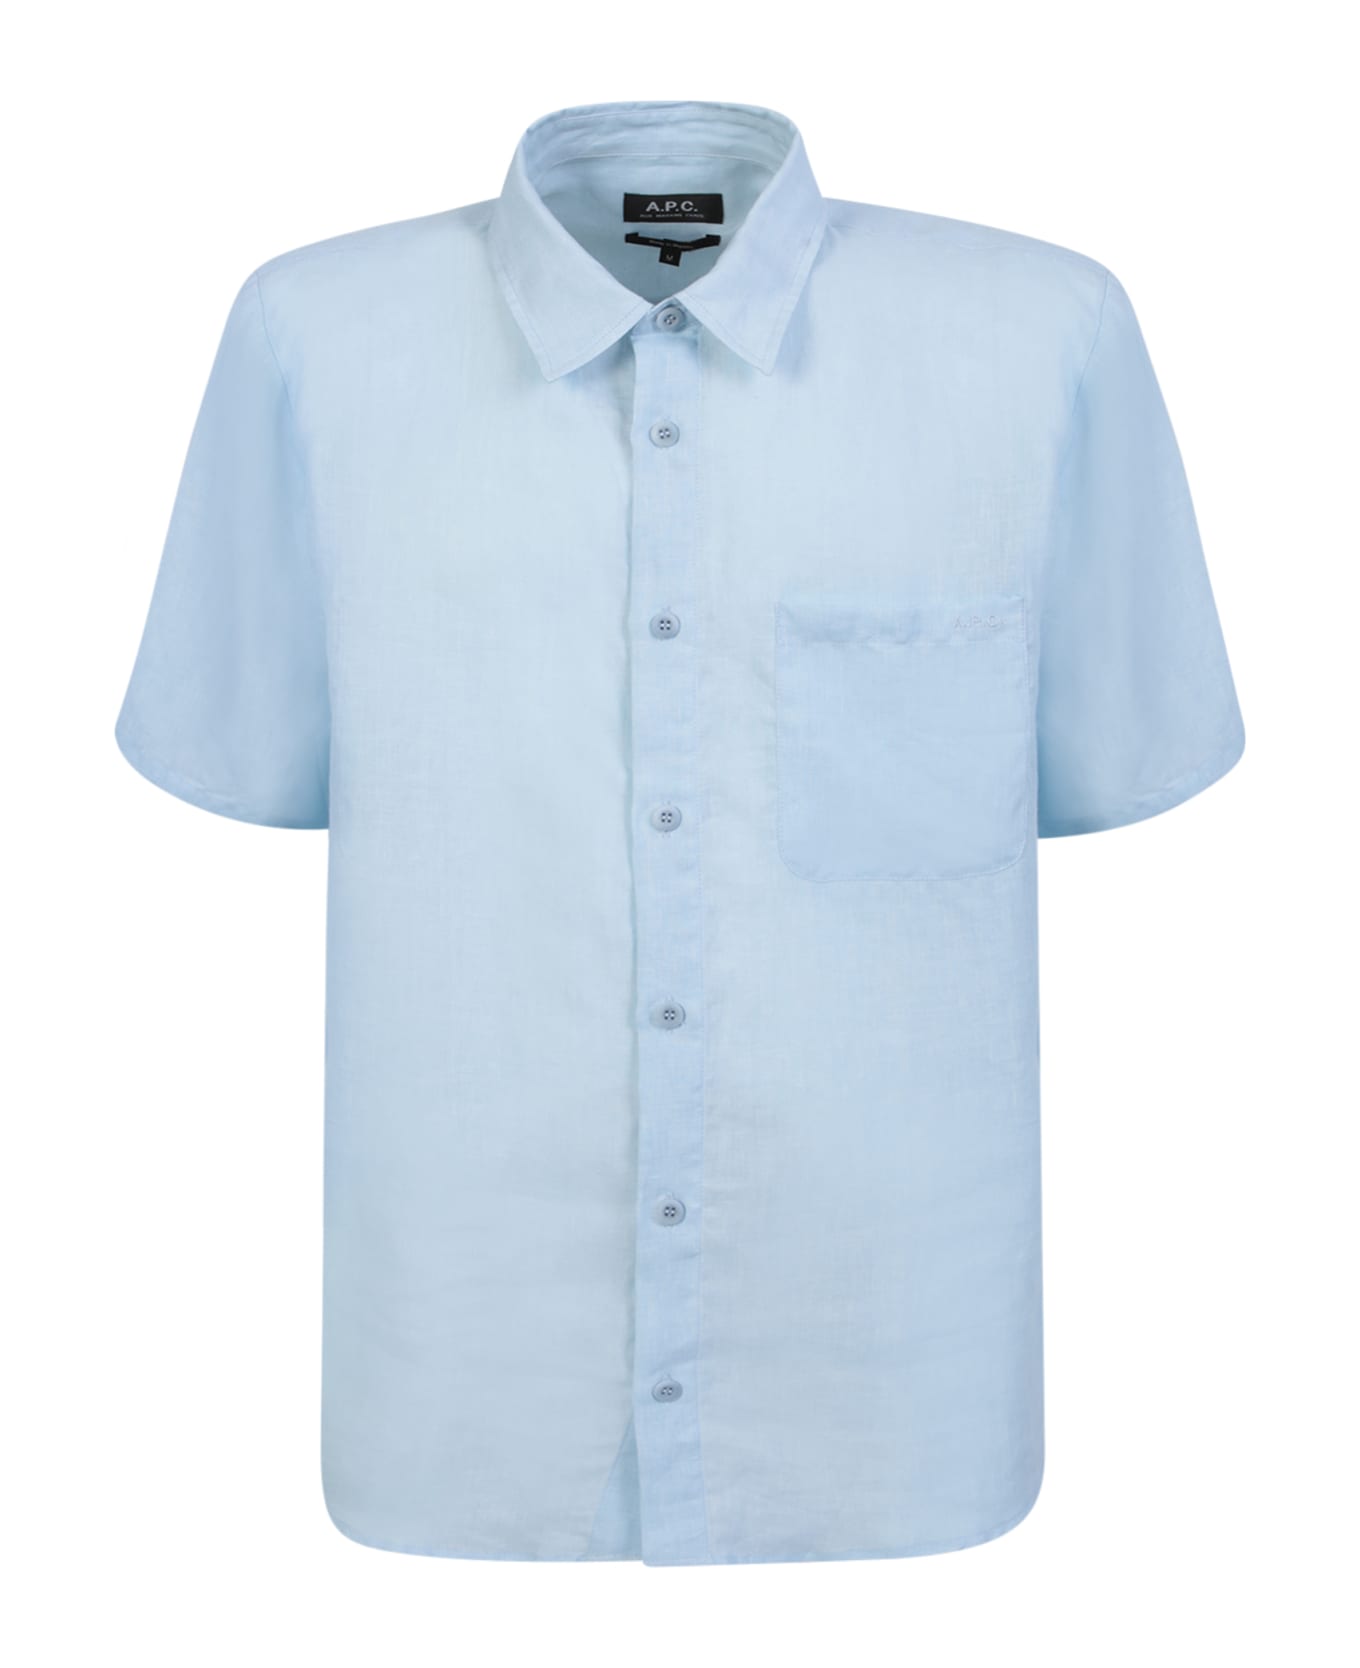 A.P.C. Bellini Shirt - Light Blue